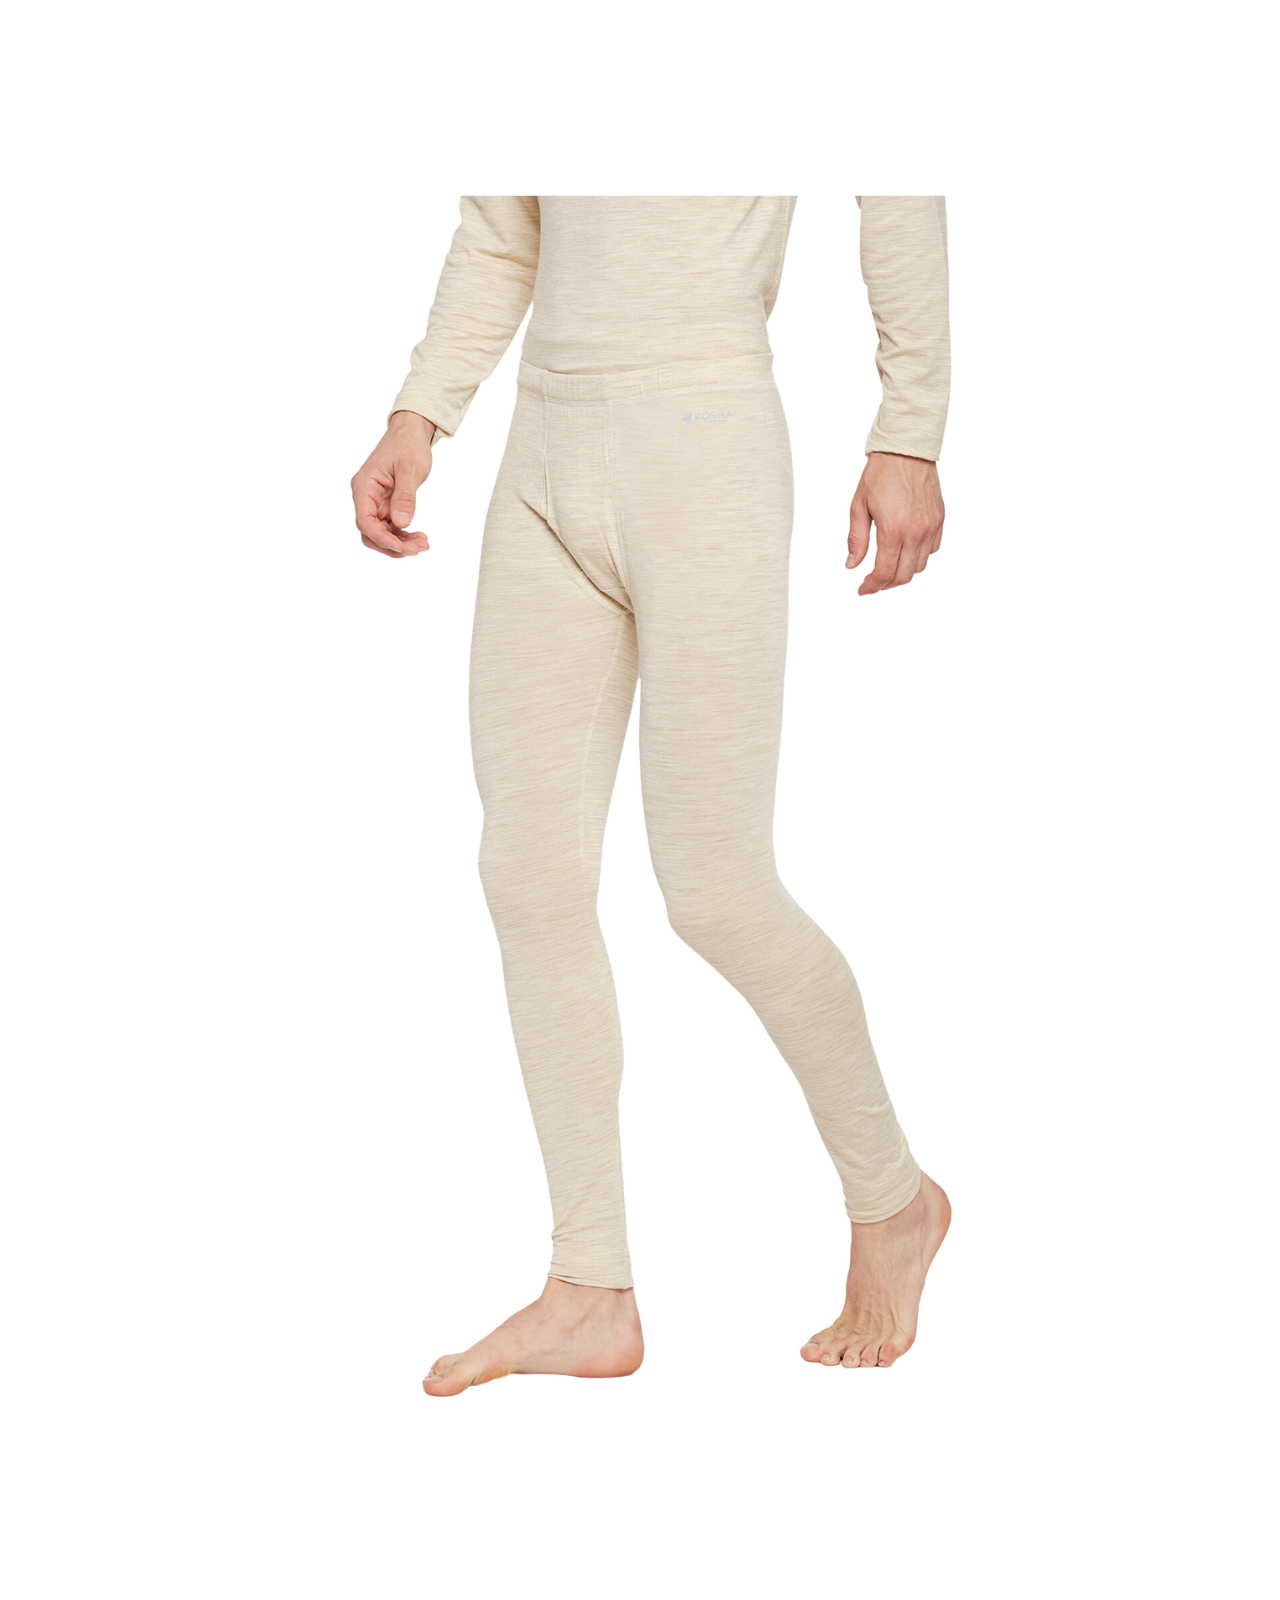 Men's Sleeveless Vest Thermal Set | Merino Wool + Bamboo